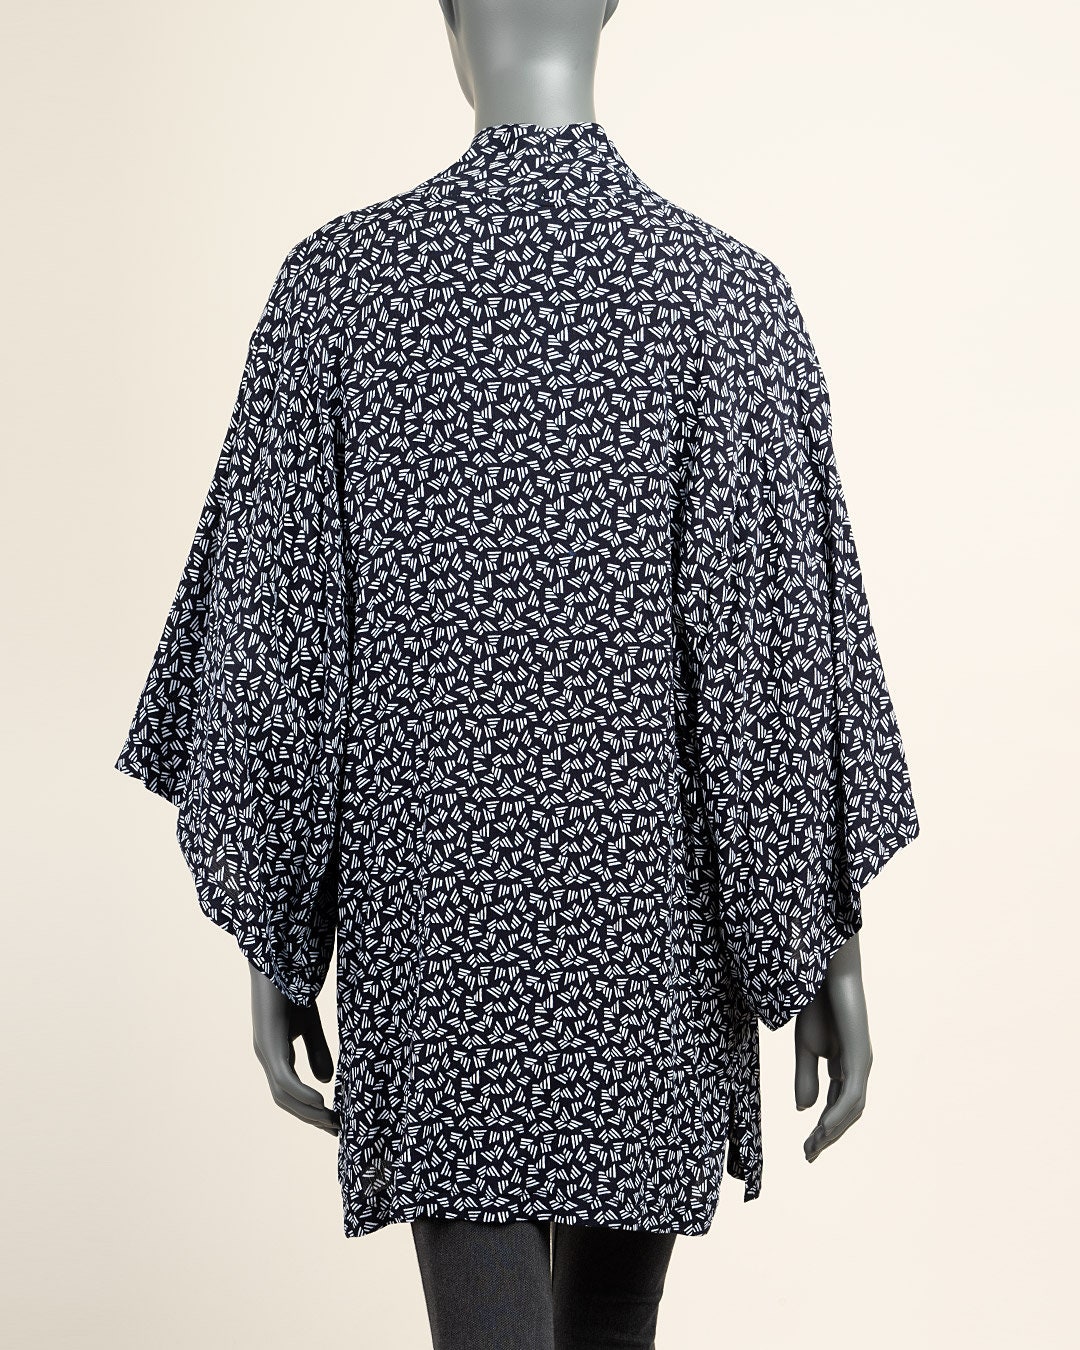 Unisex Kimono Print Gender Neutral Clothing Handmade in | Etsy